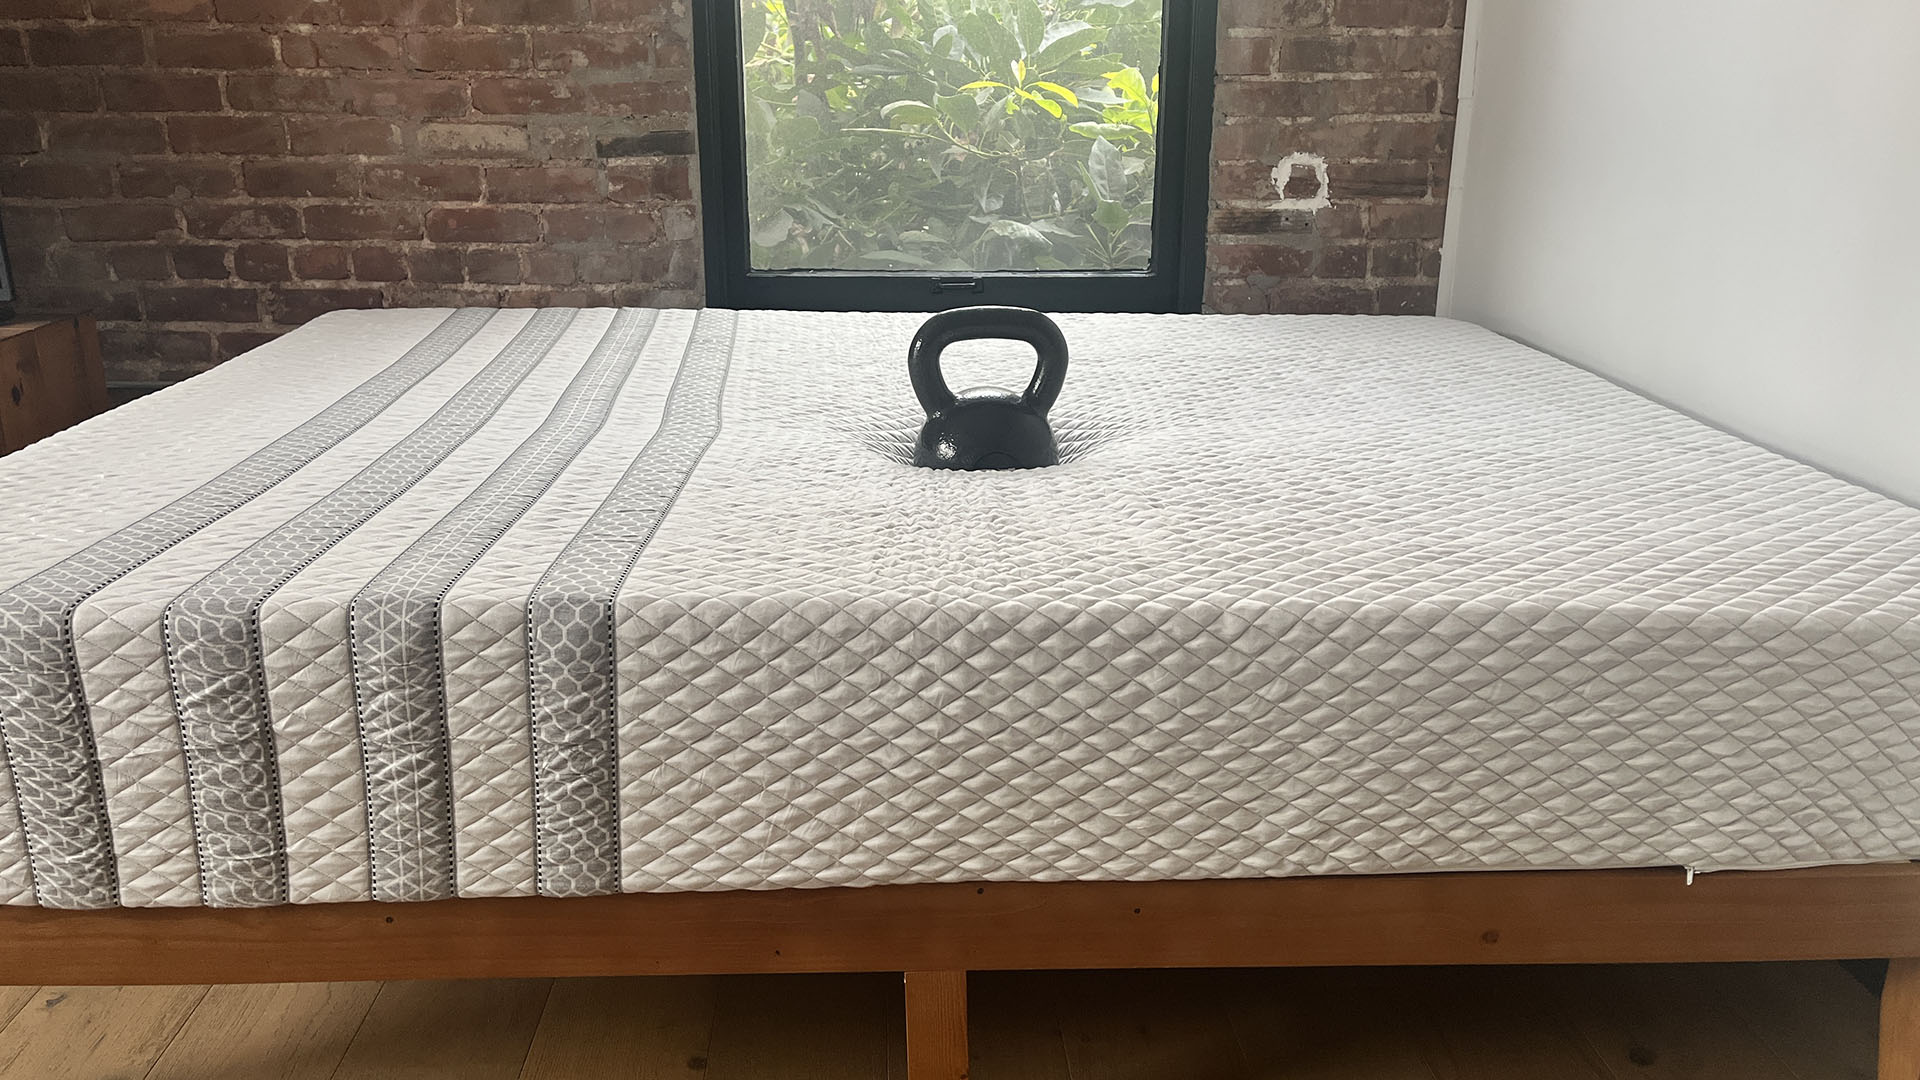 Leesa Sapira Hybrid matress on a wooden bedframe in a red brick bedroom